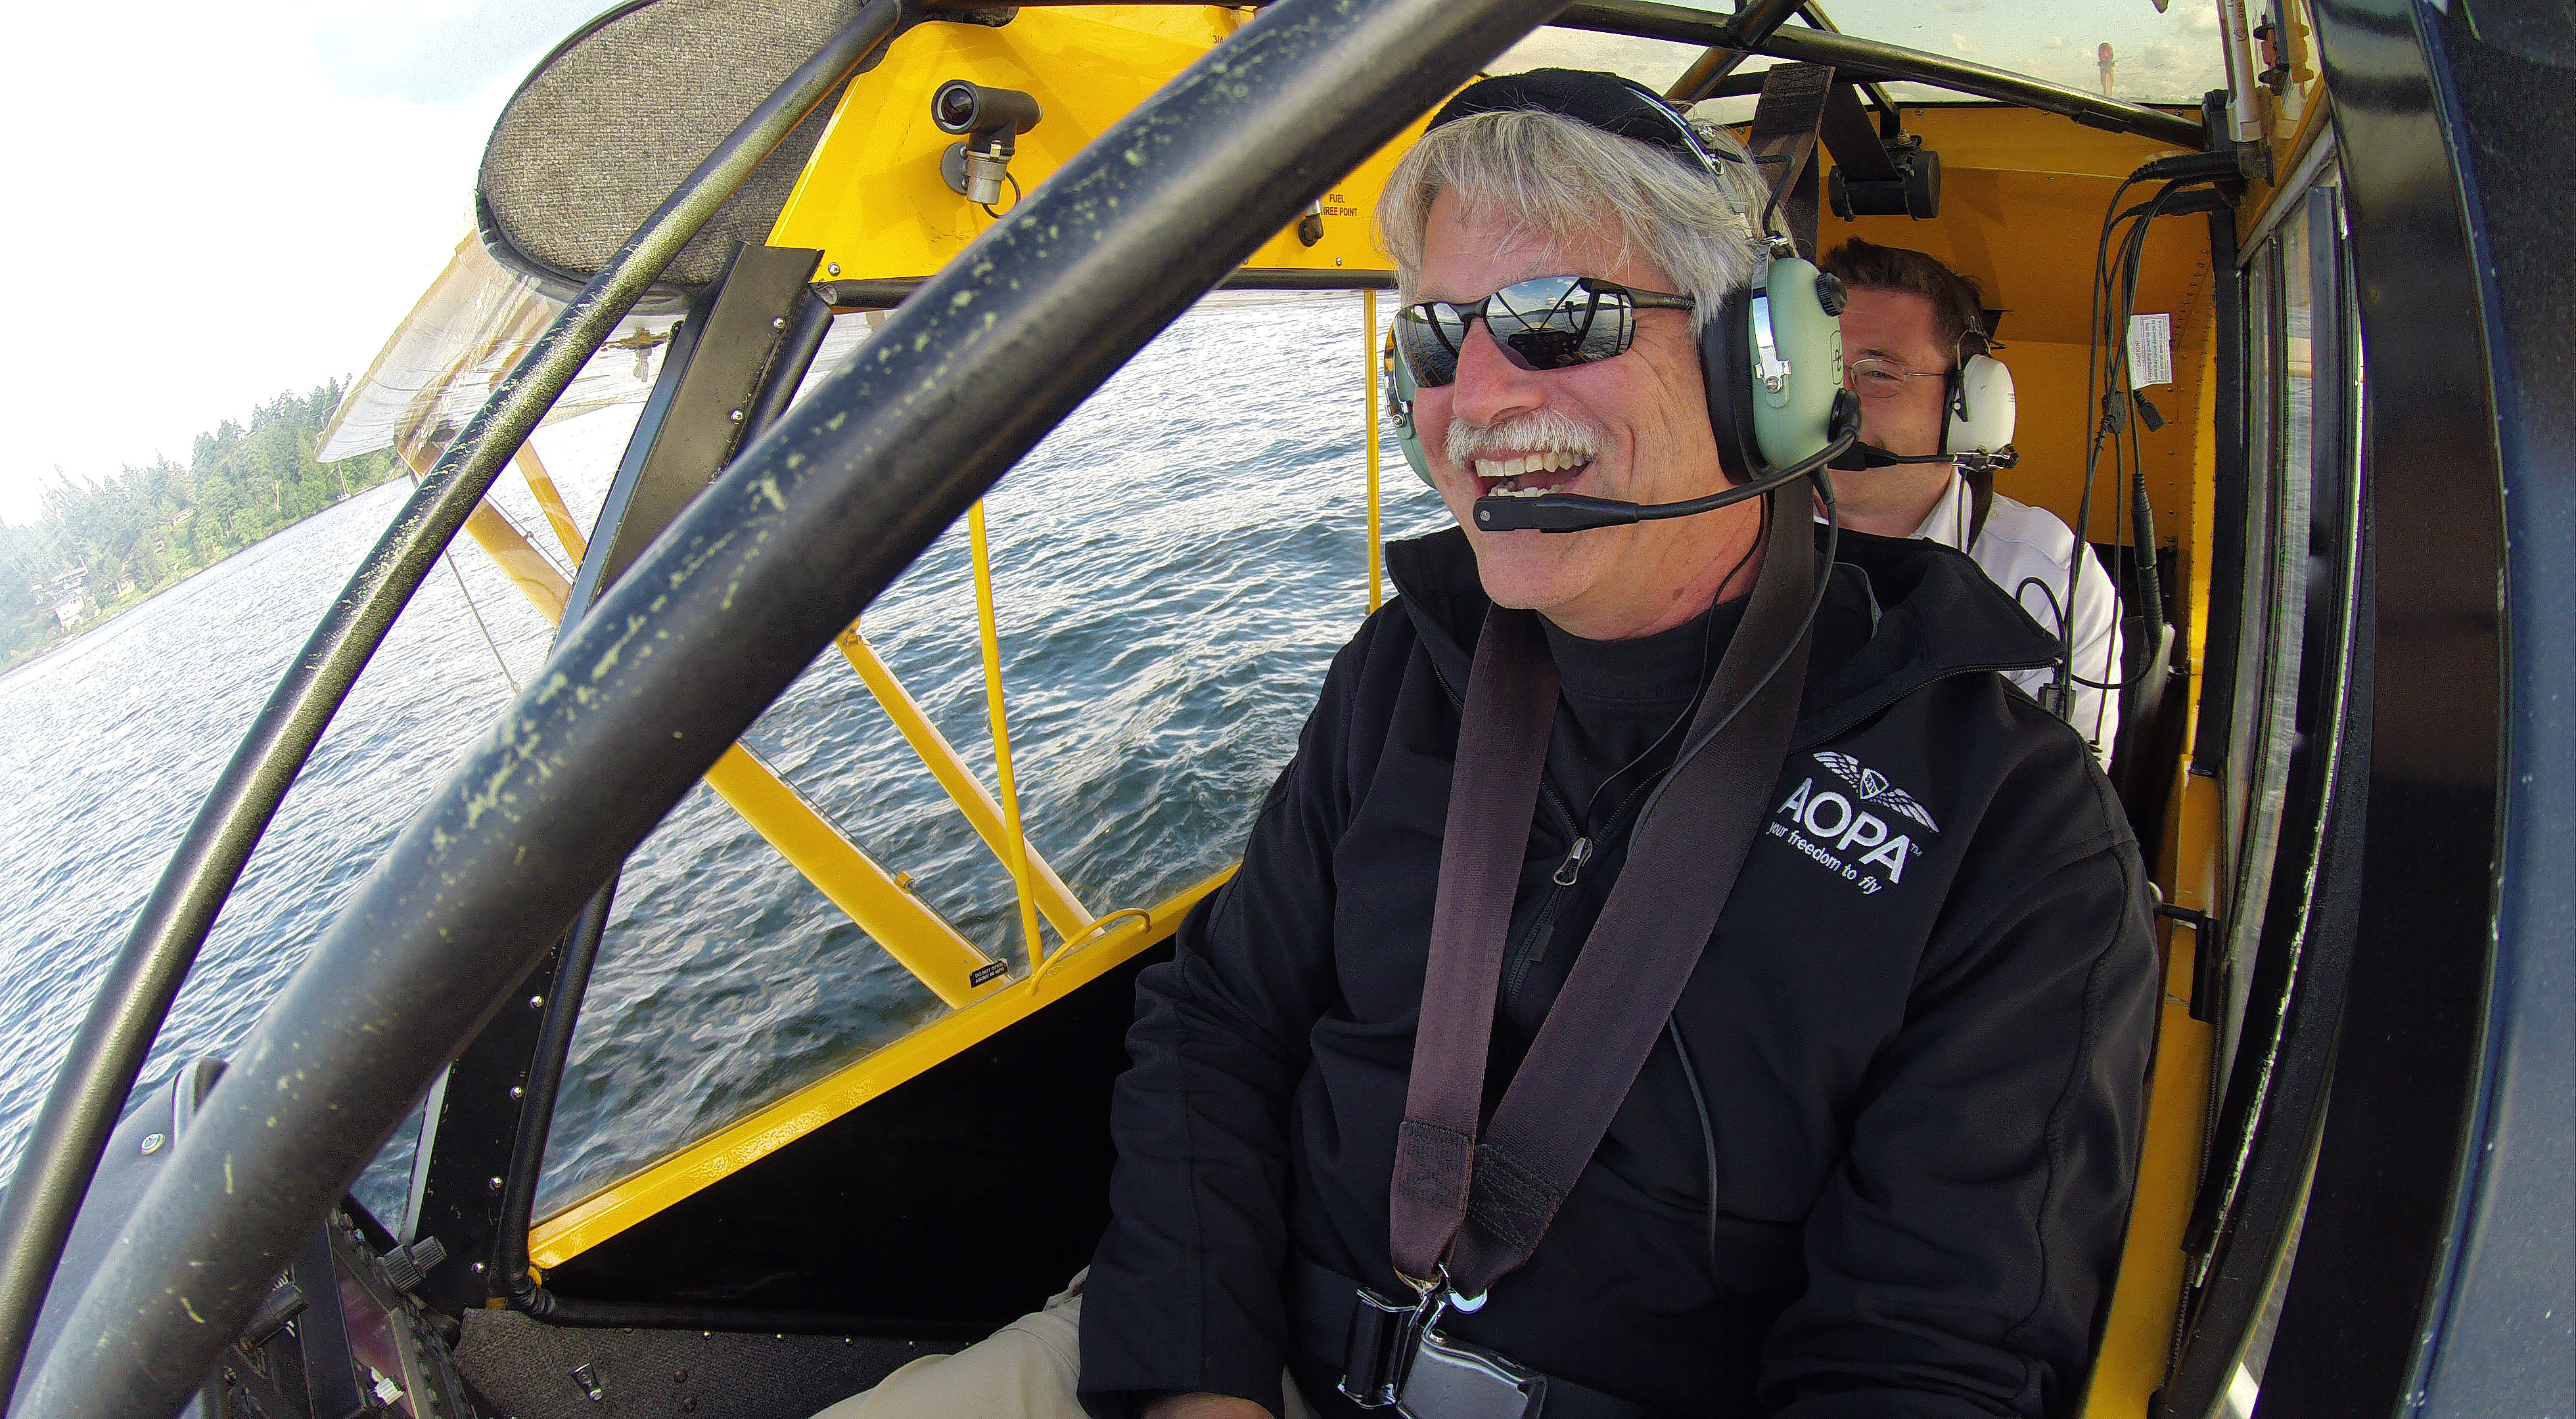 Flight instructor Sean Brady teaches floatplane flying to AOPA's David Tulis at Kenmore Air Harbor in Kenmore, Washington. Photo by David Tulis.